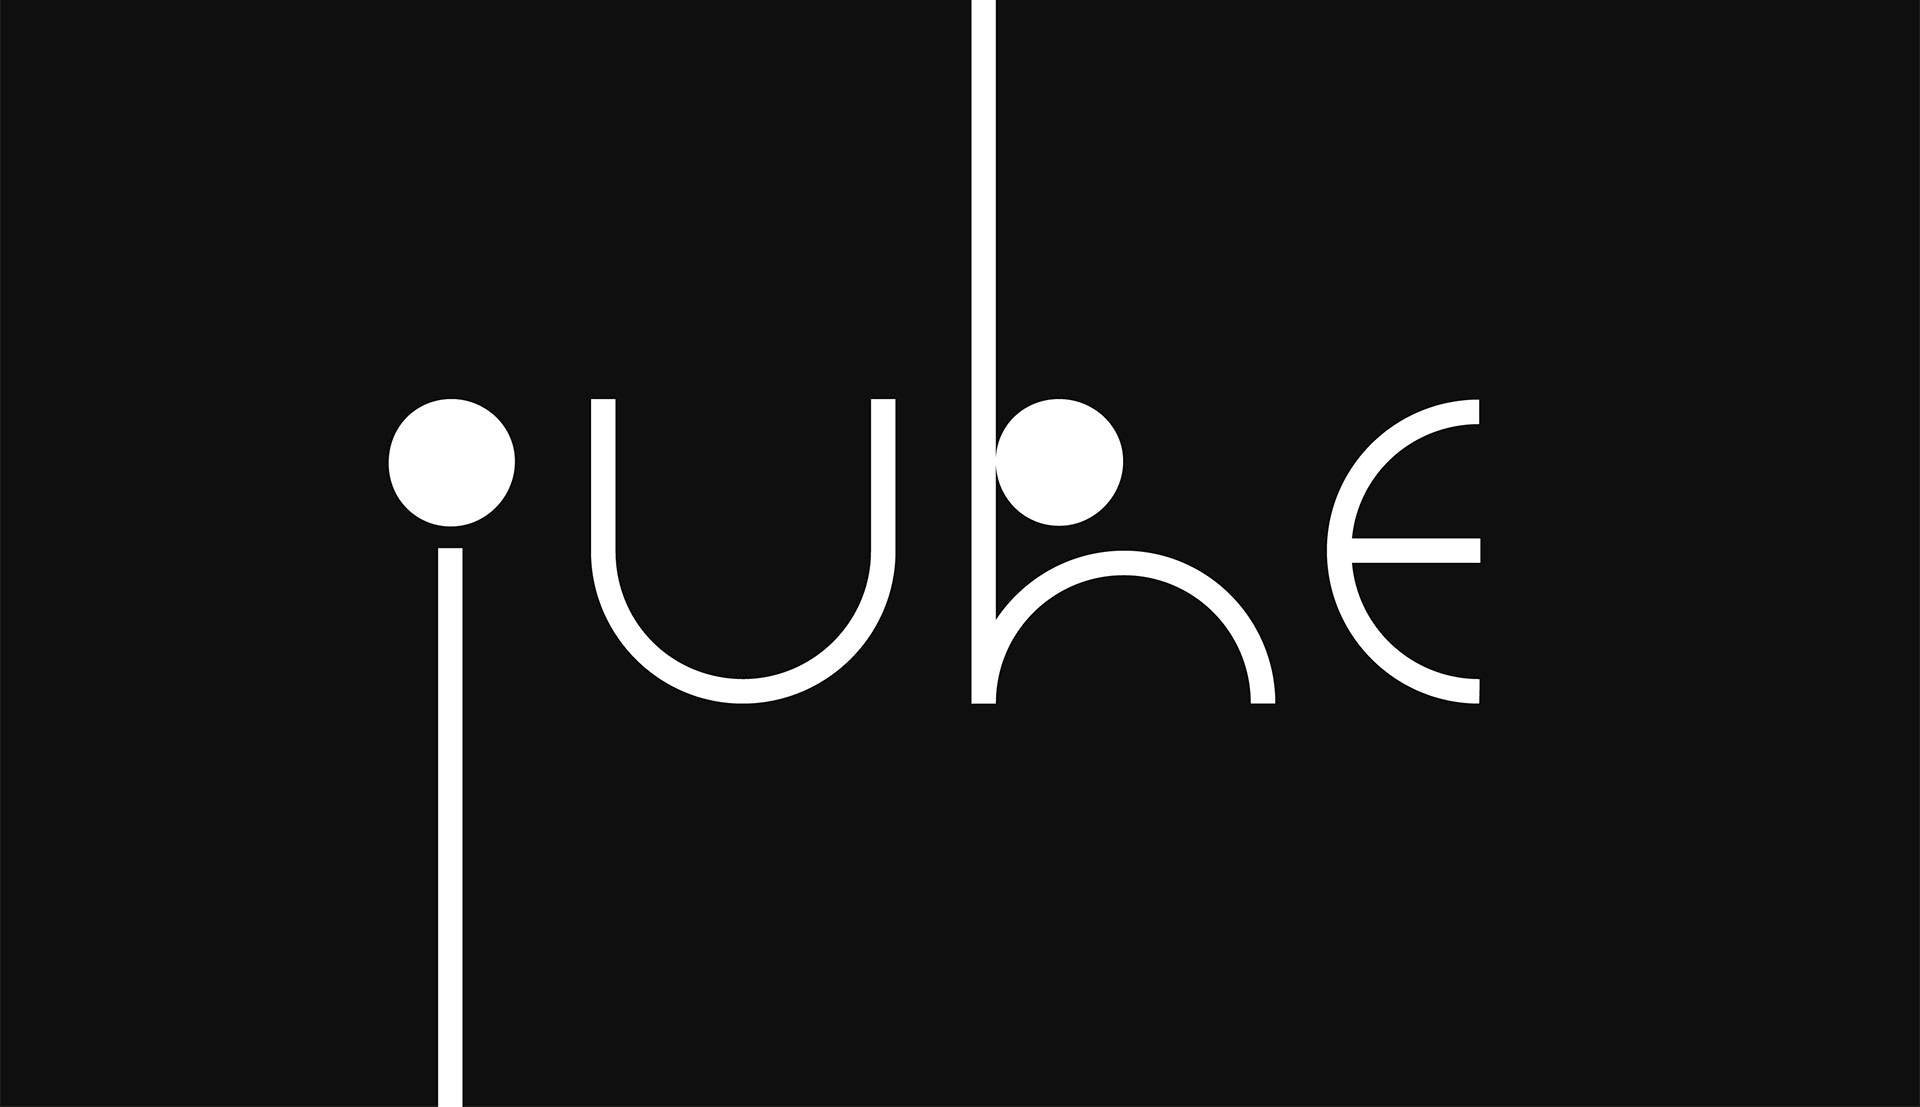 Juke Typeface by Student Polina Larina